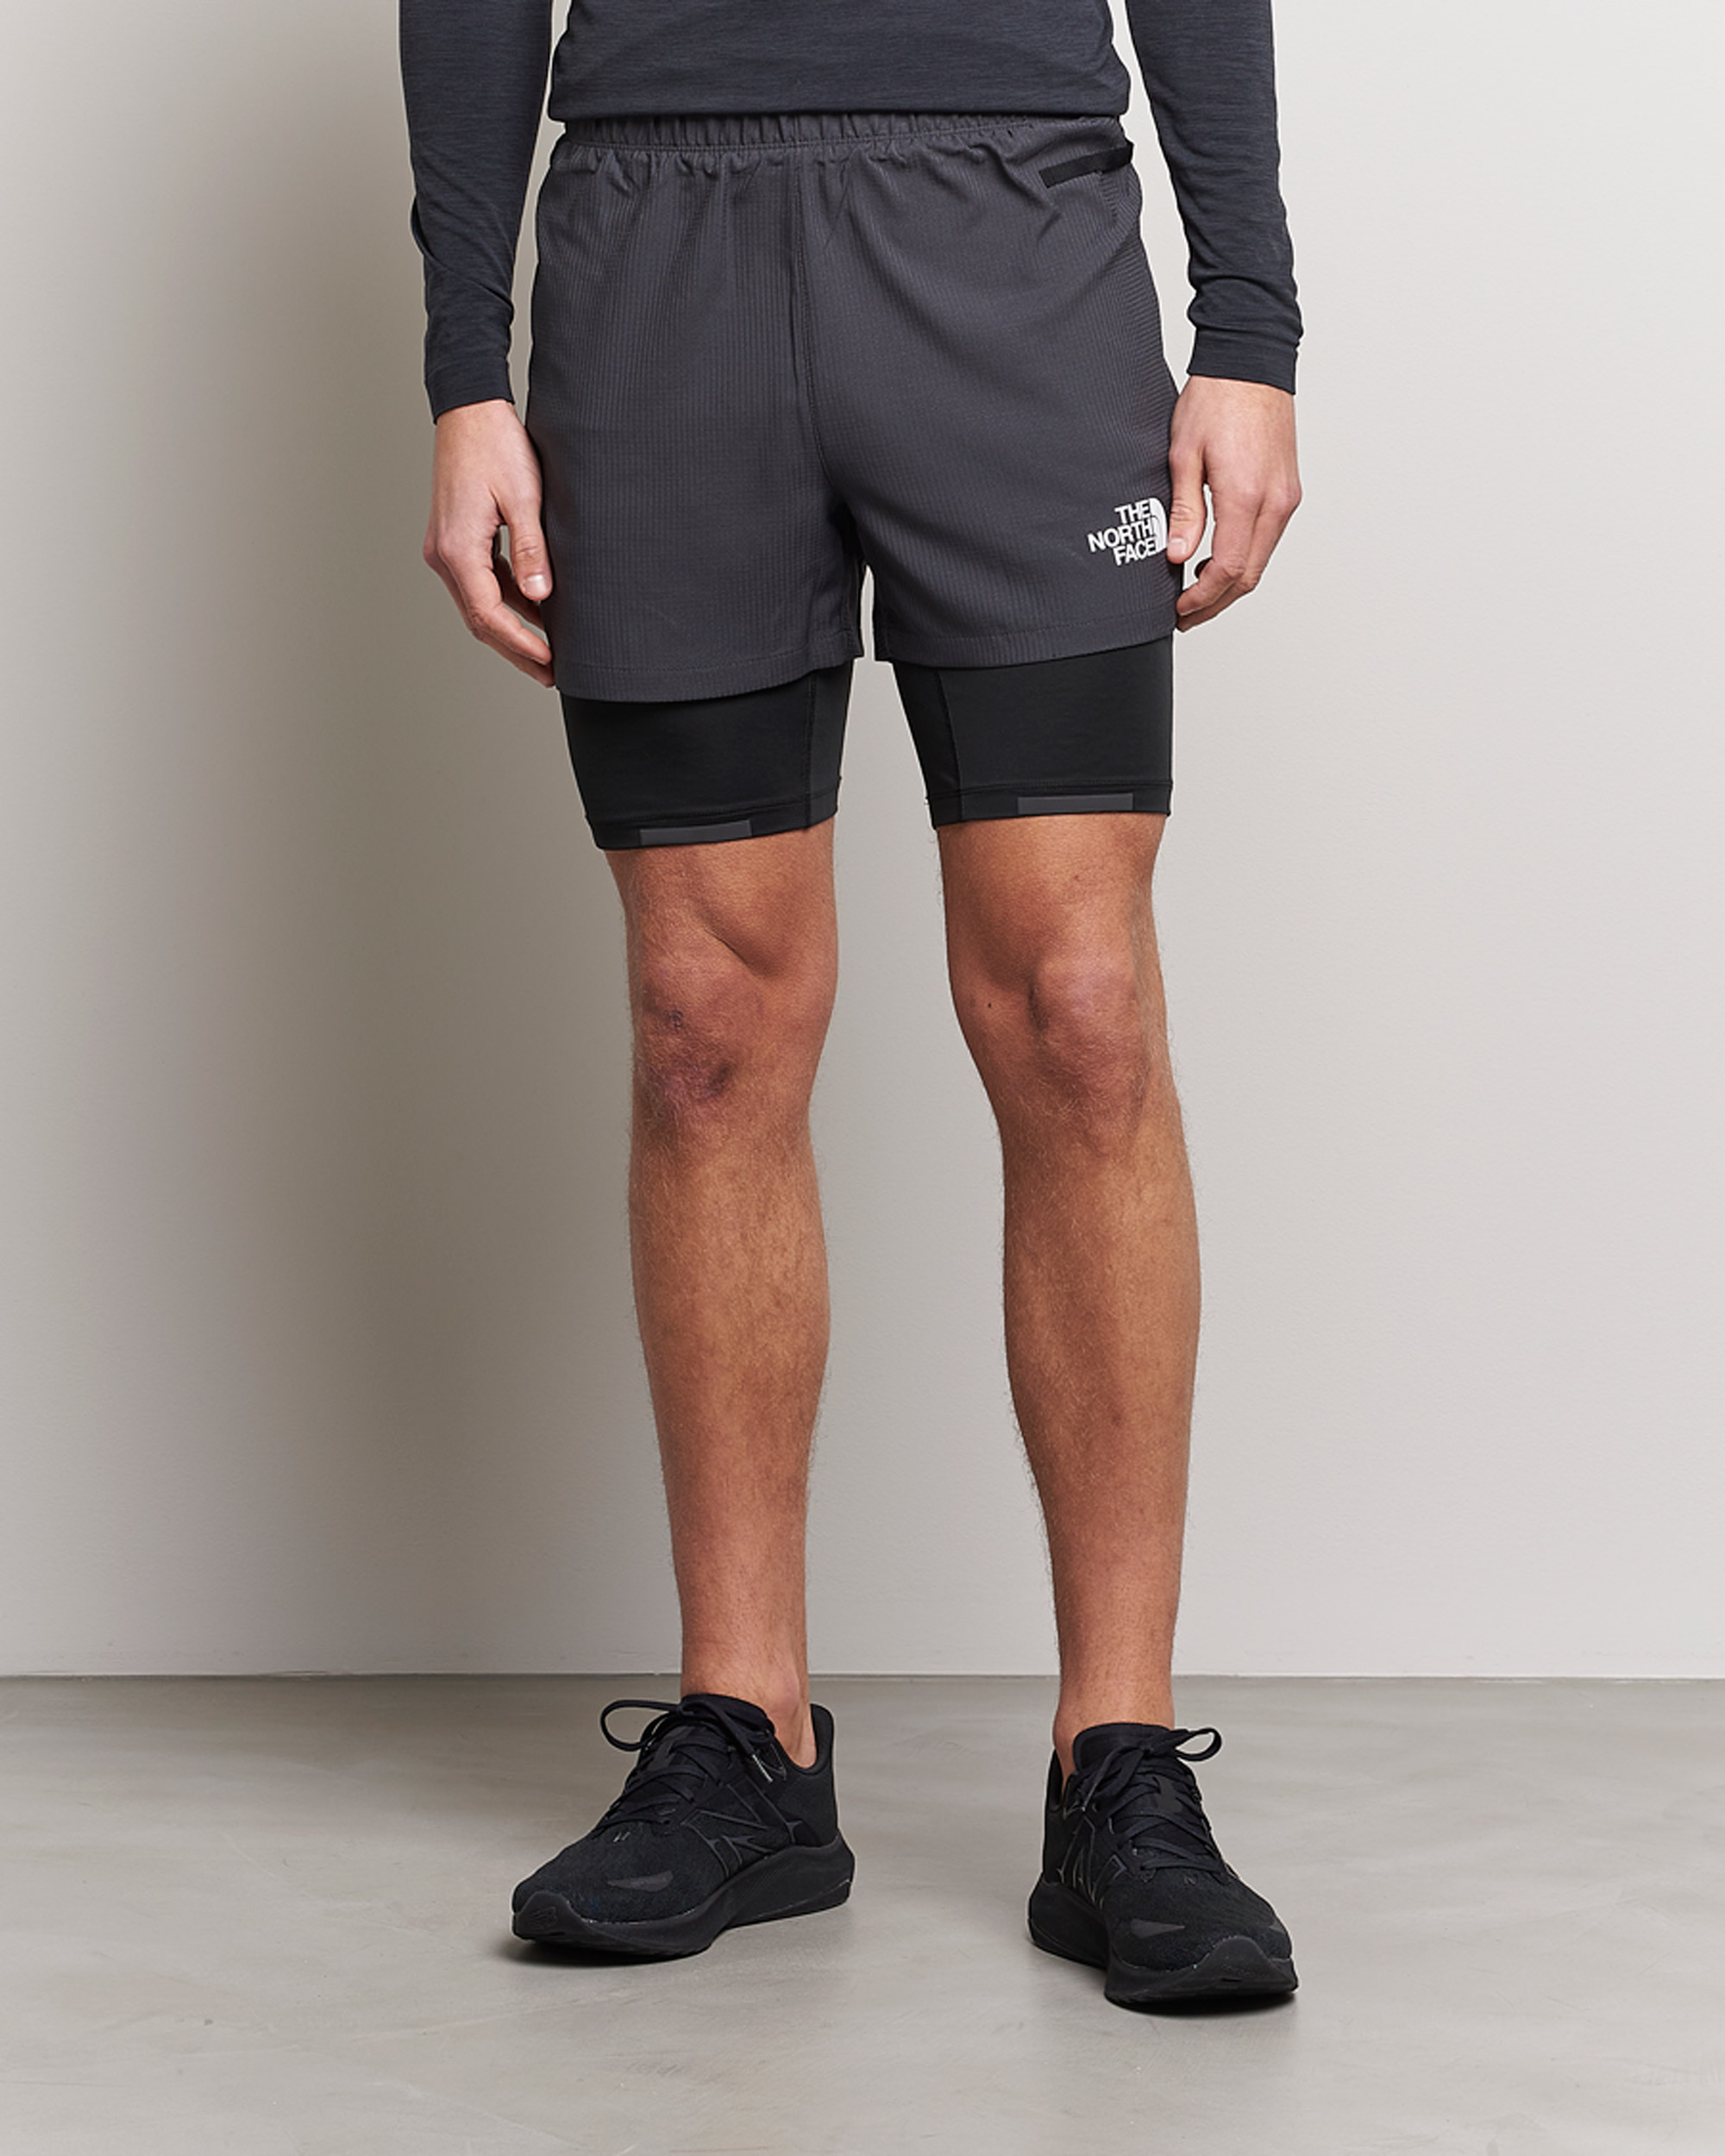 Herren |  | The North Face | Mountain Athletics Dual Shorts Black/Asphalt